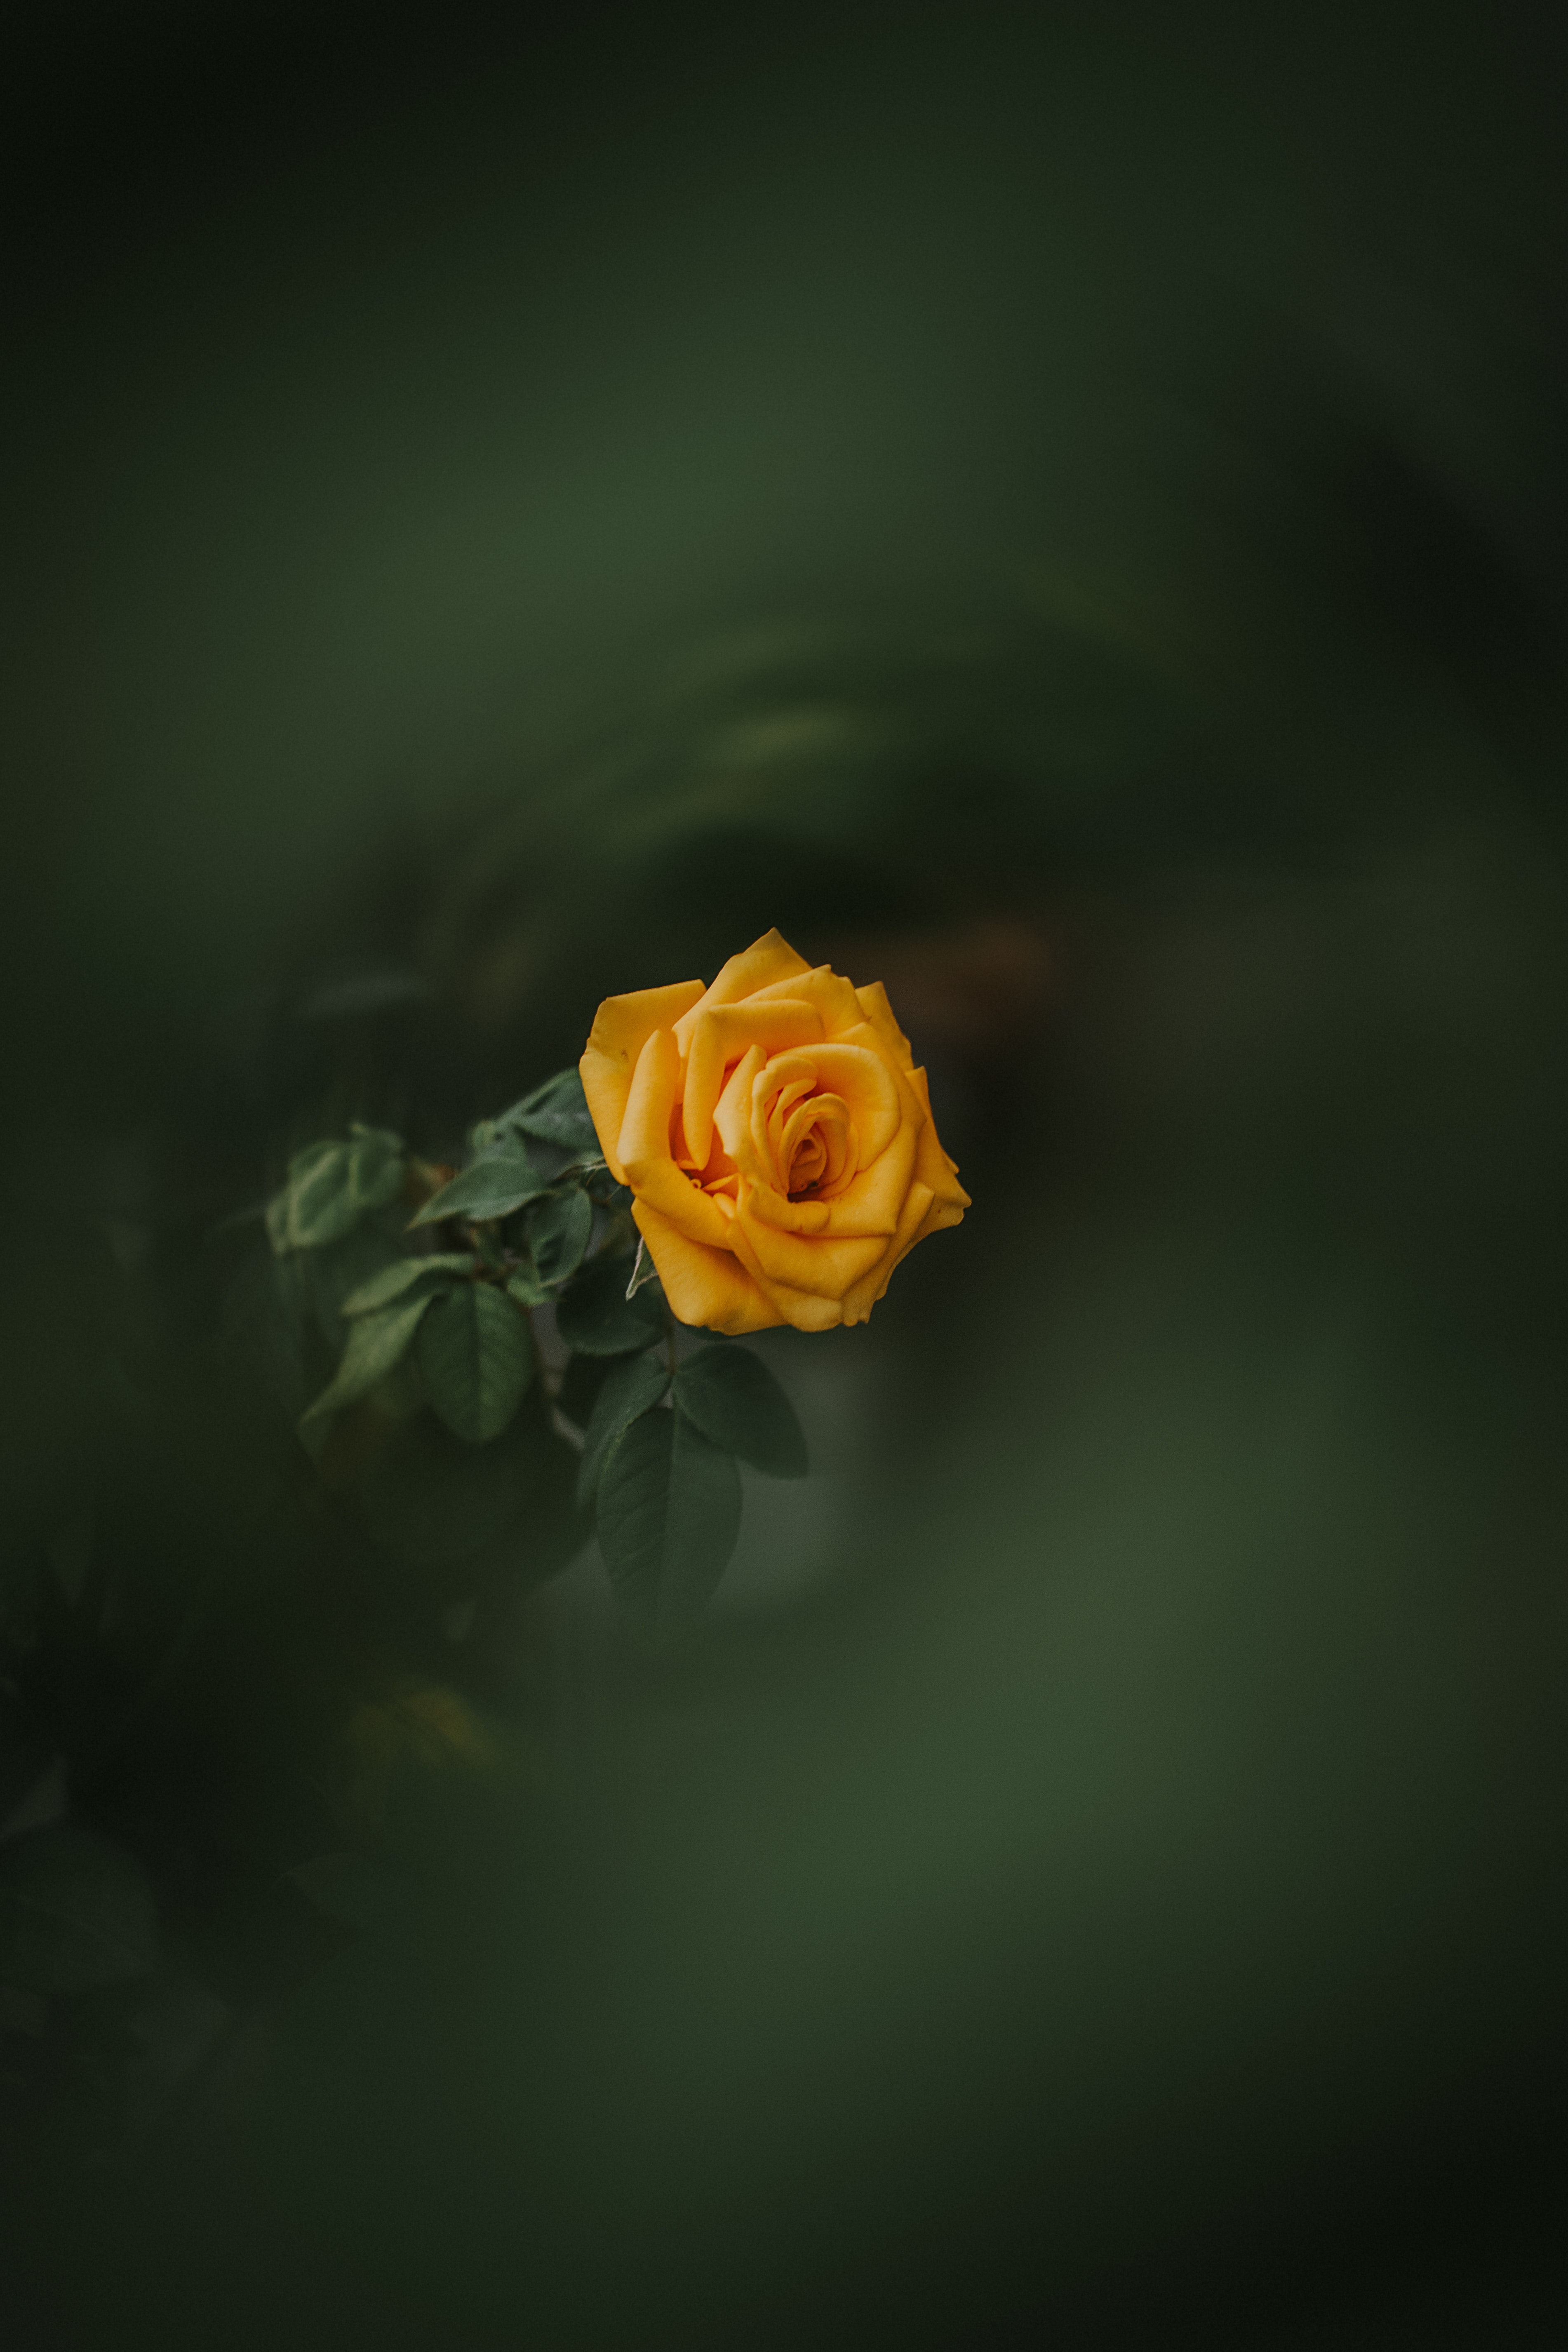 rose, rose flower, green, flowers, yellow, bud, blur, smooth, garden